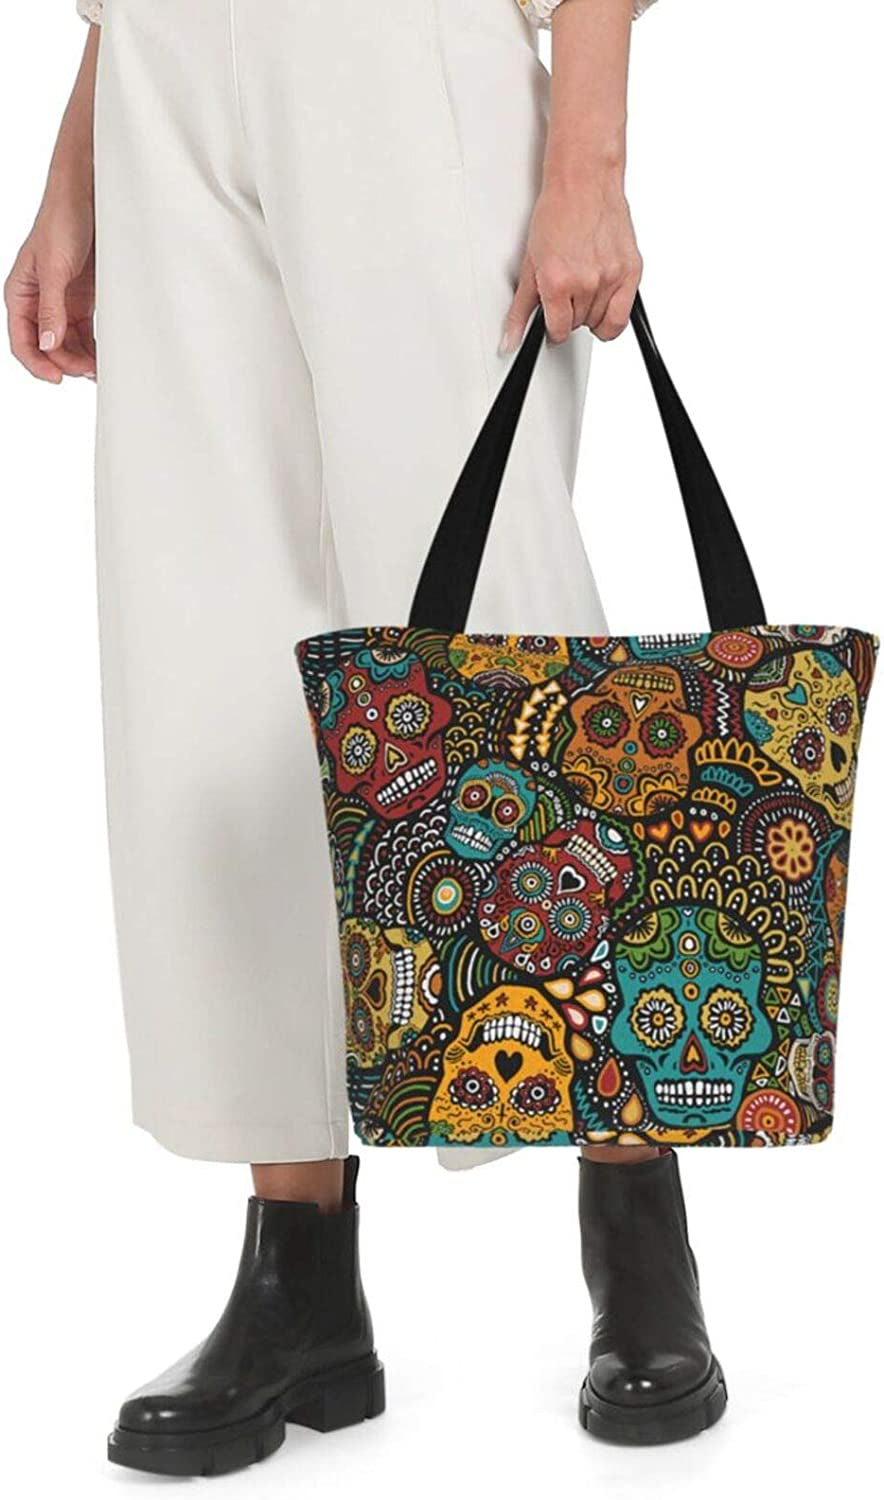 Antkondnm Reusable Tote Bag Women Large Casual Handbag Shoulder Bags for Shopping Groceries Travel Outdoors